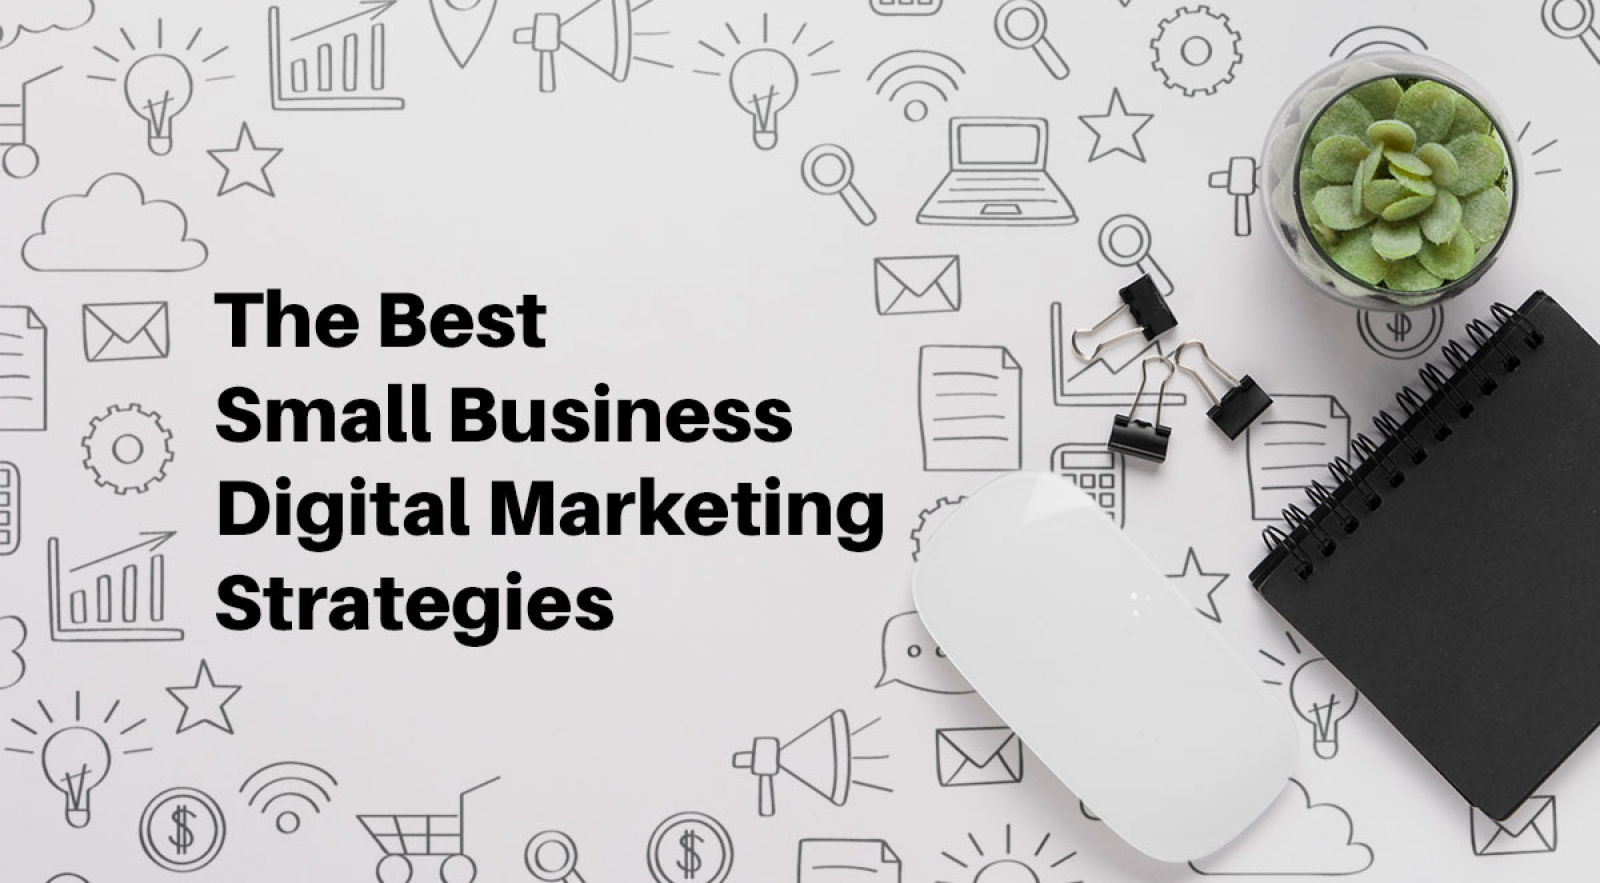 9 of the Best Small Business Digital Marketing Strategies